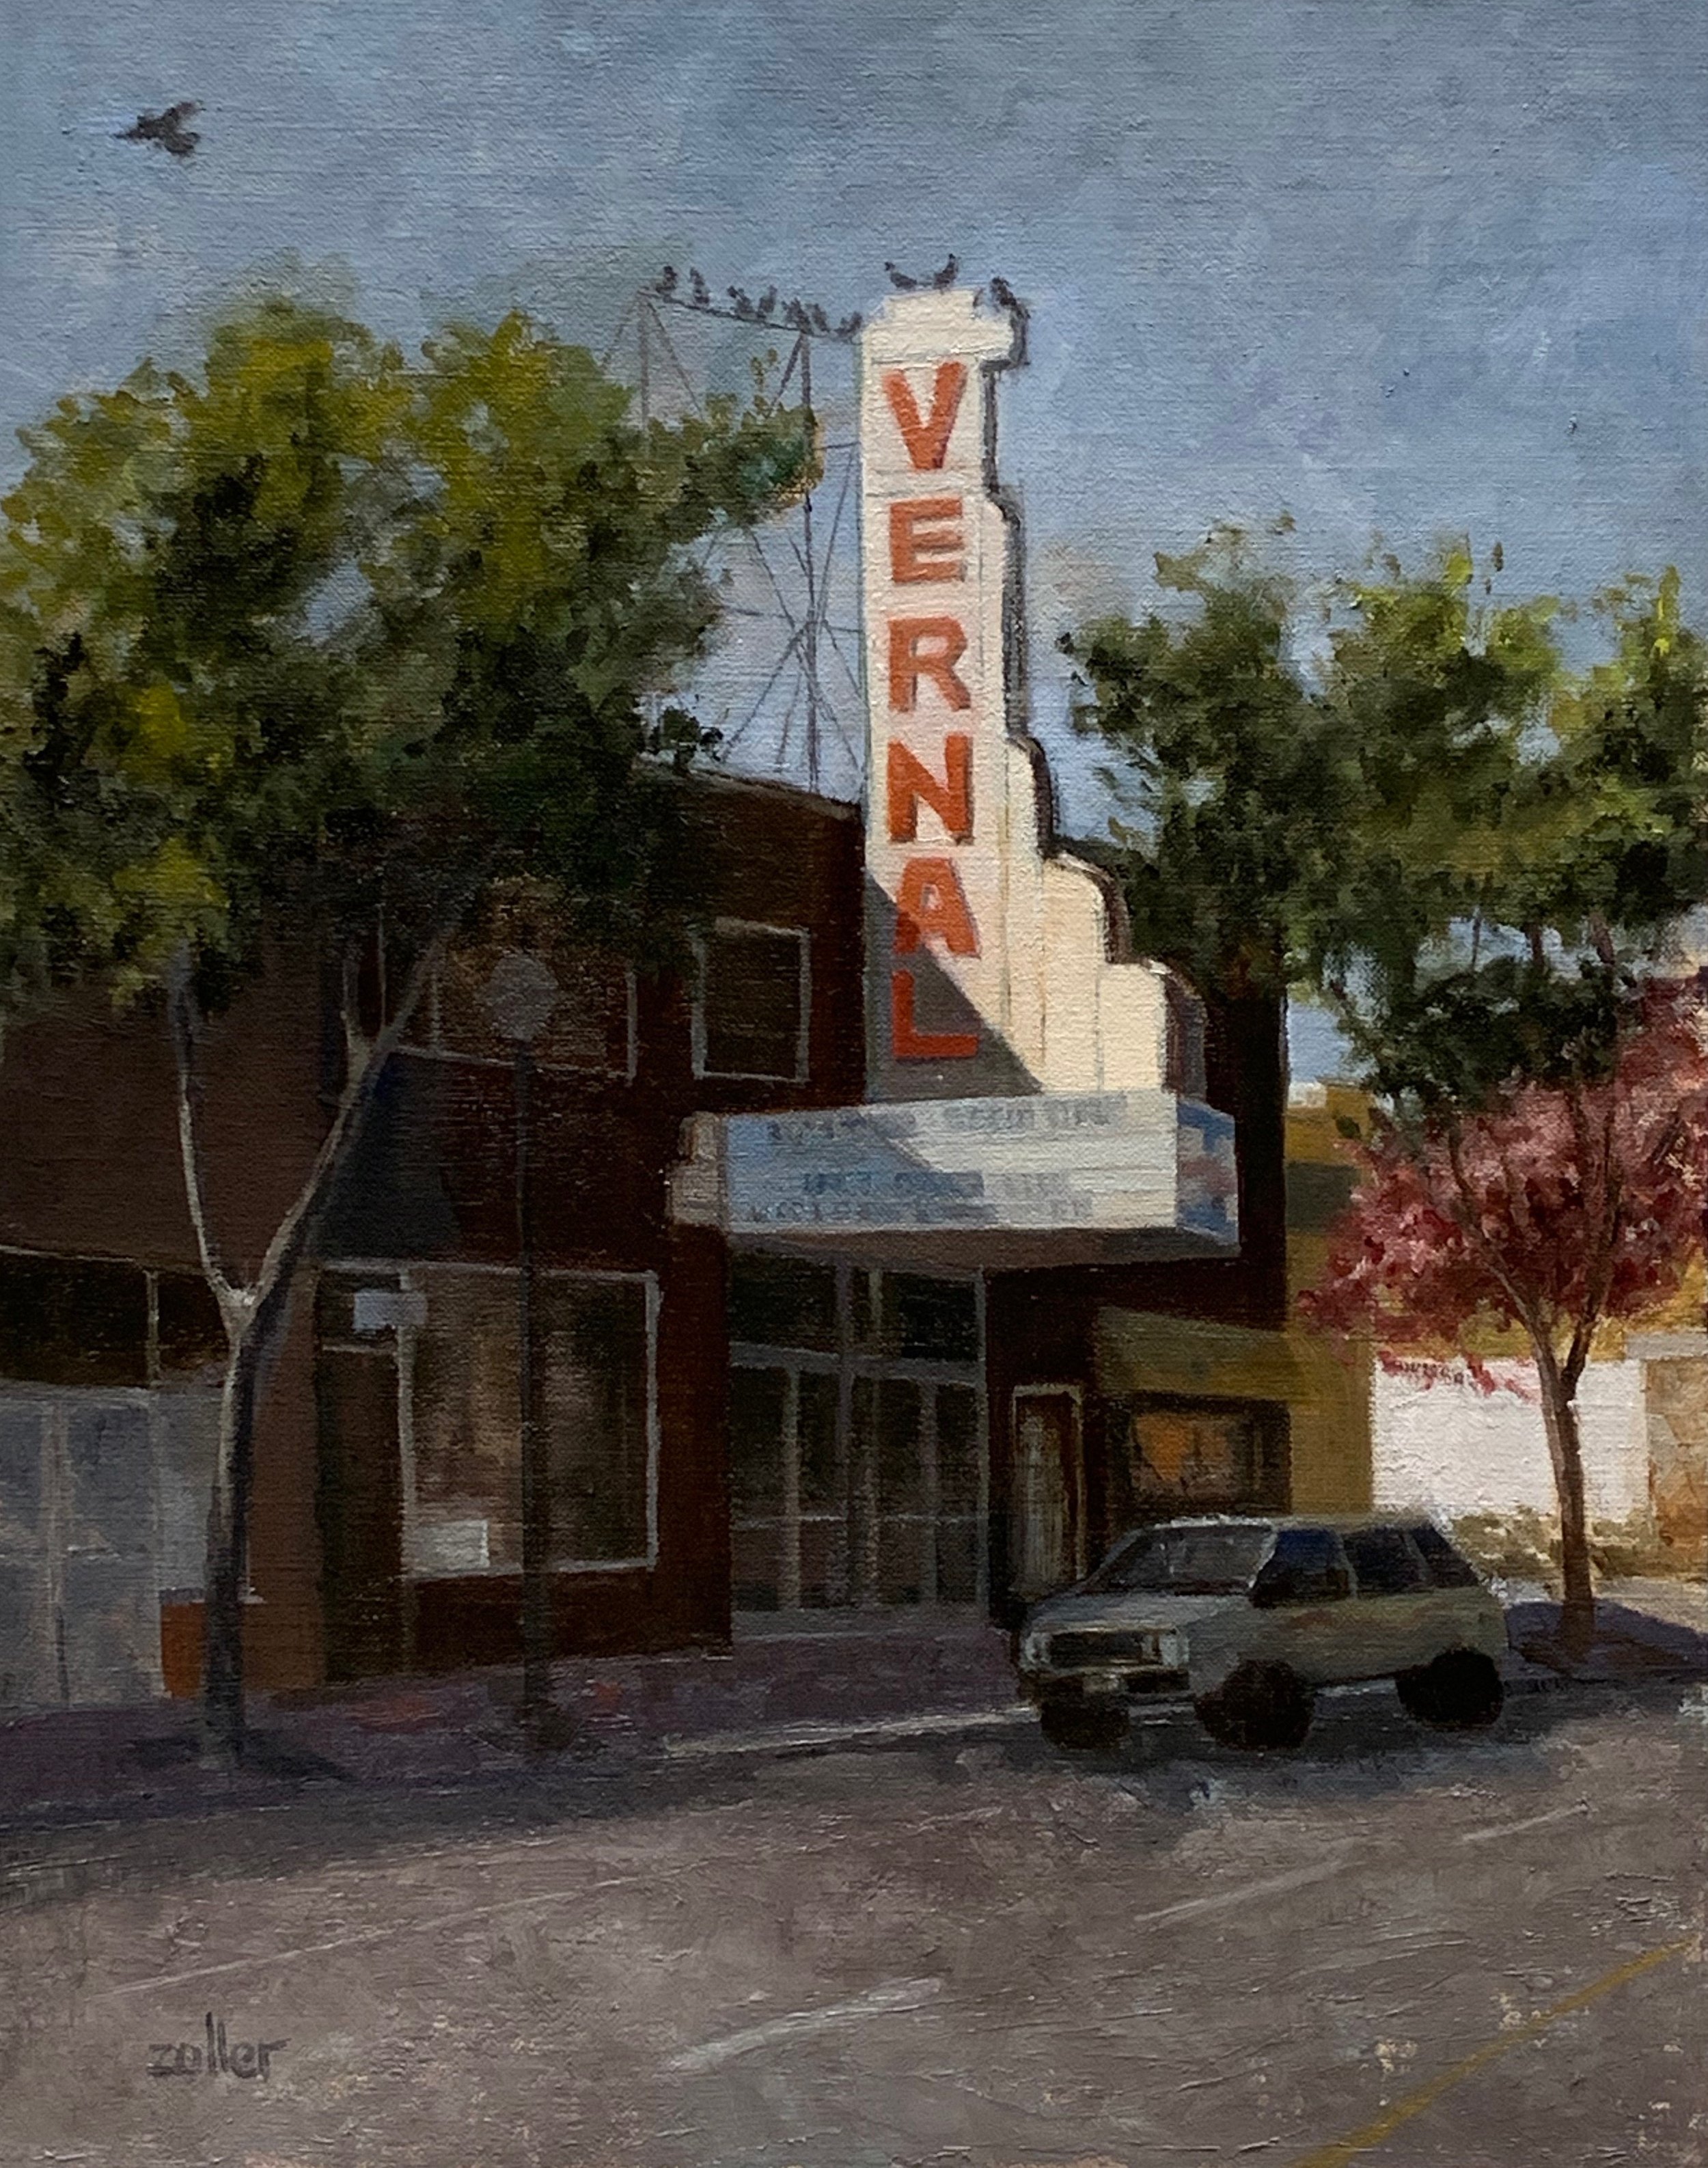 Vernal Cinema